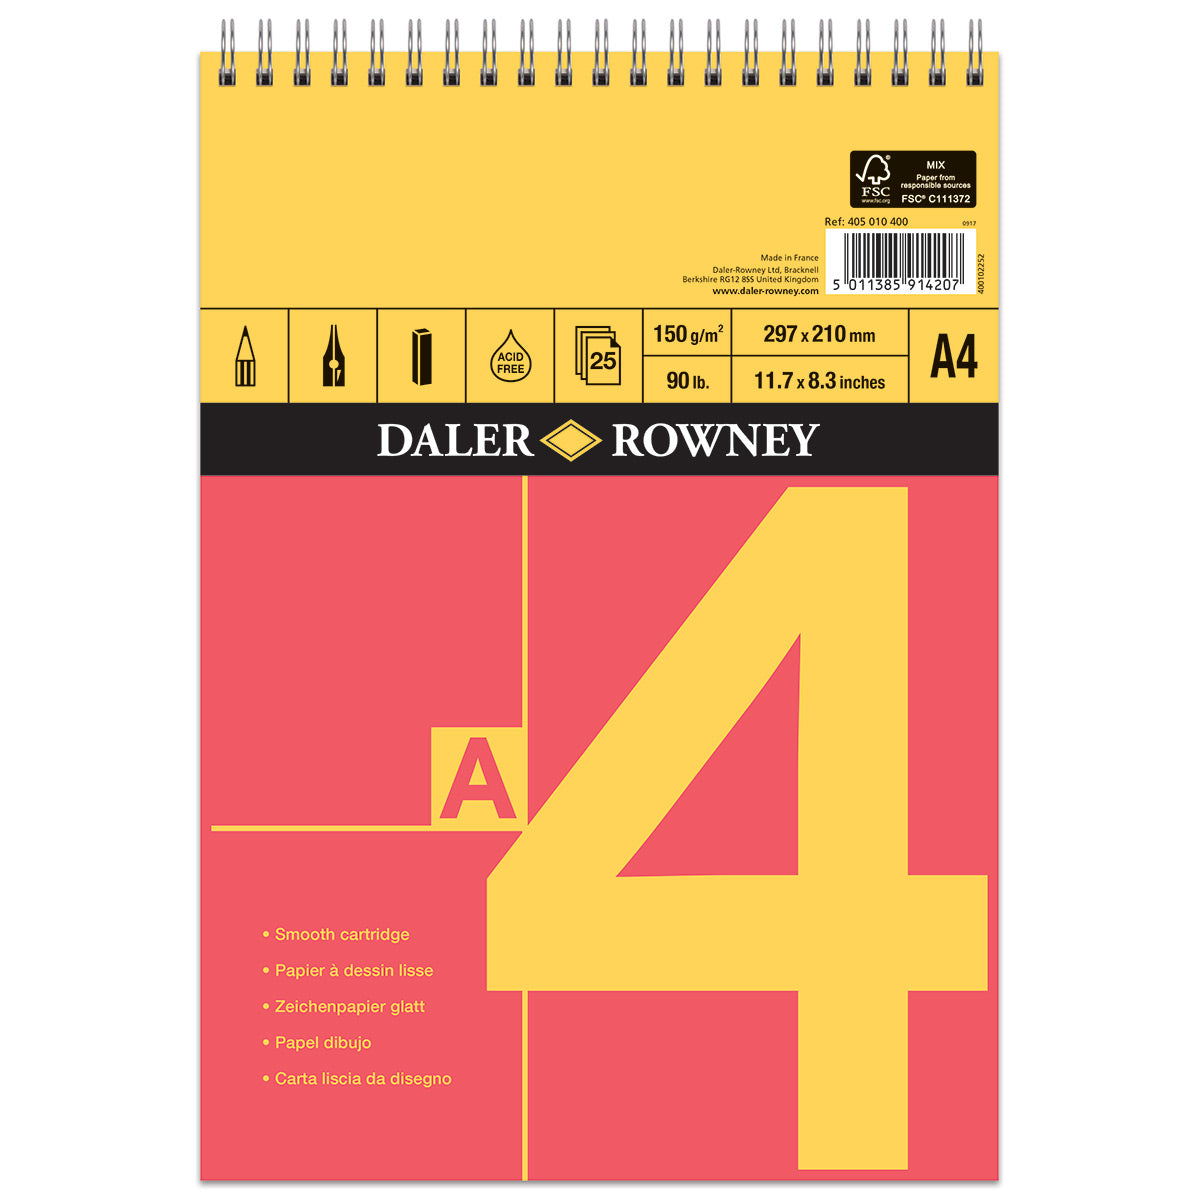 Daler Rowney - Blocco per schizzi a cartuccia a spirale rossa e gialla - A4 - 150 g/m²